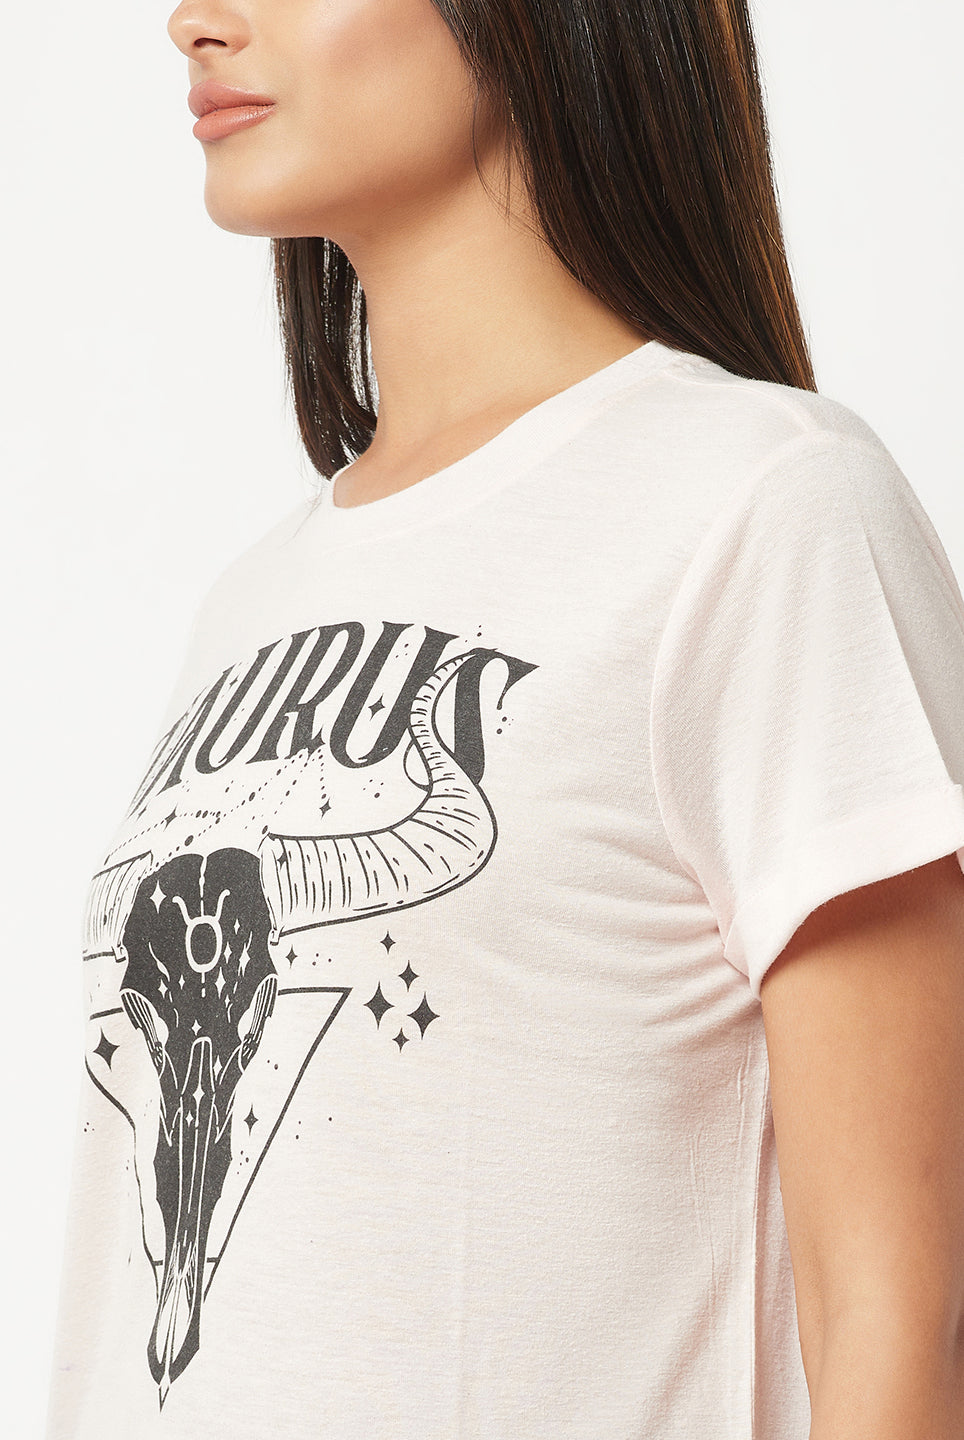 Taurus Zodiac Sign T-shirt